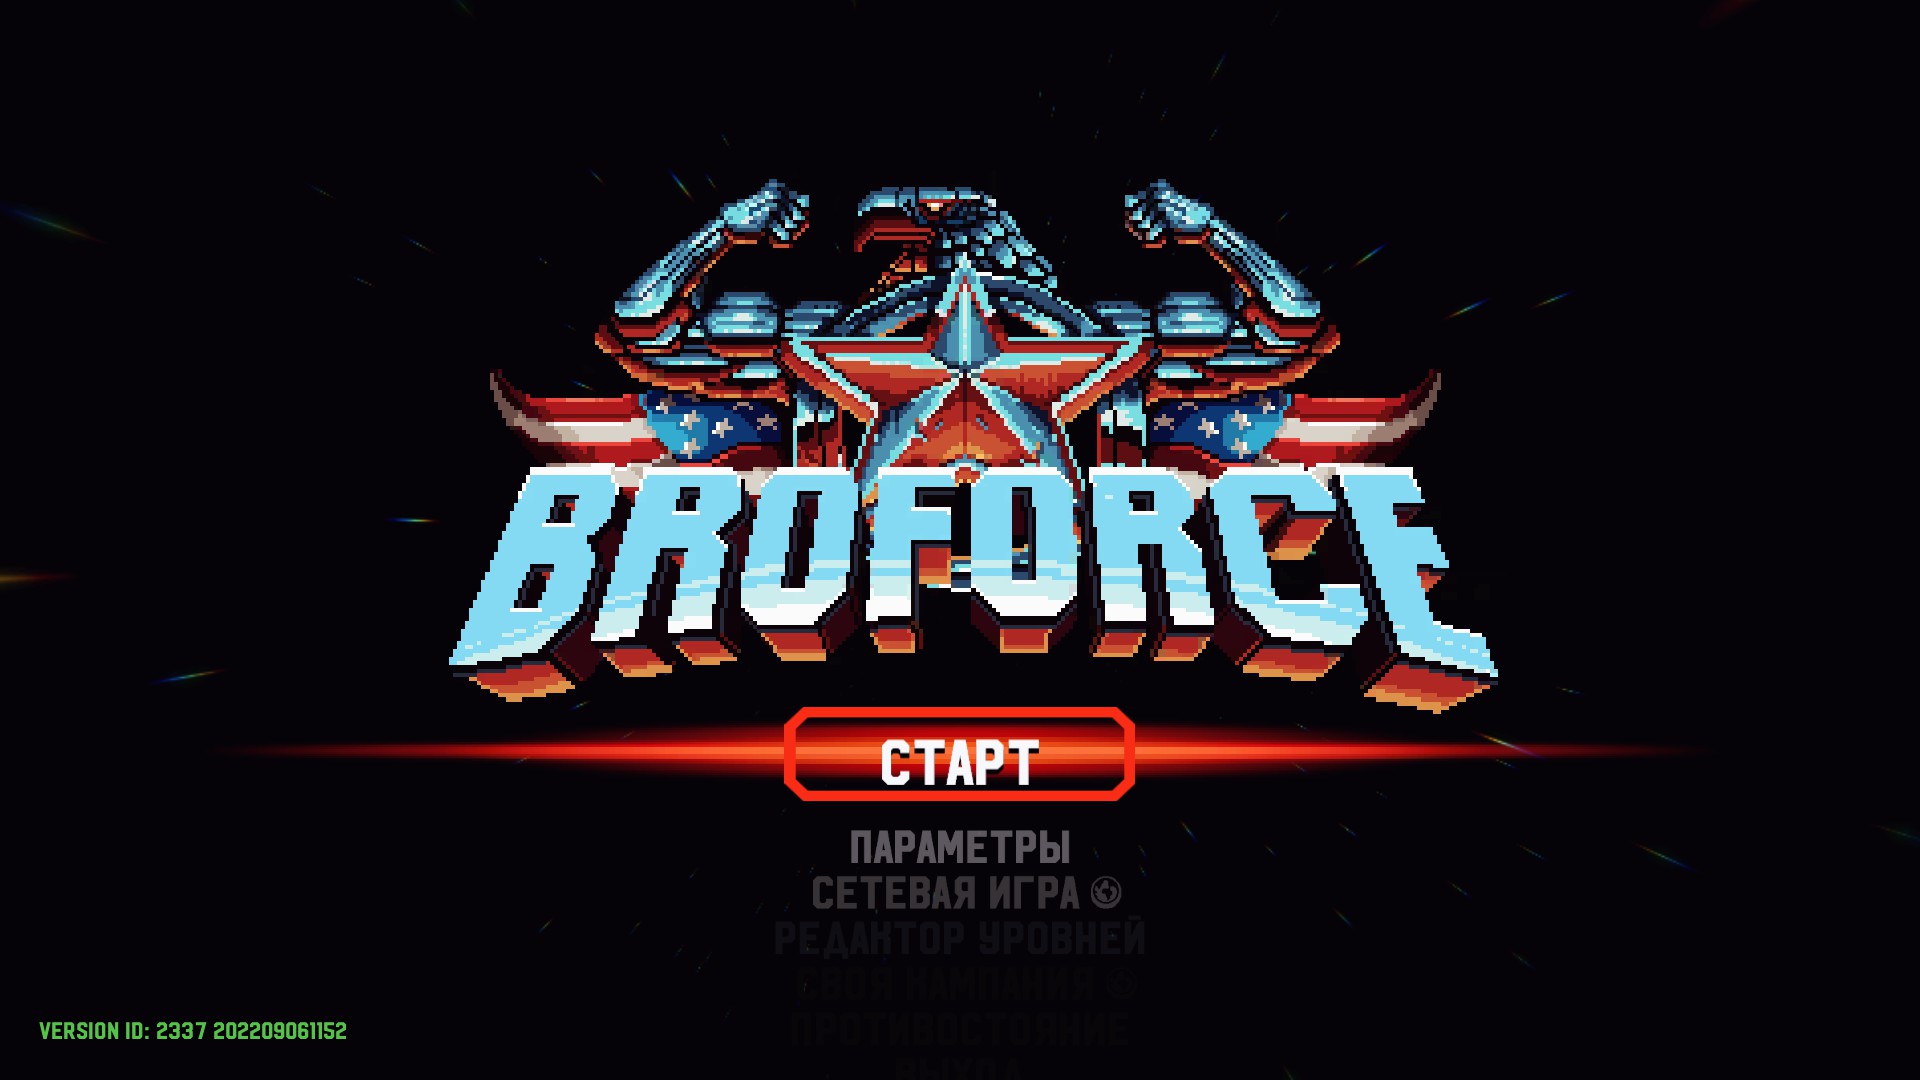 Broforce image 6